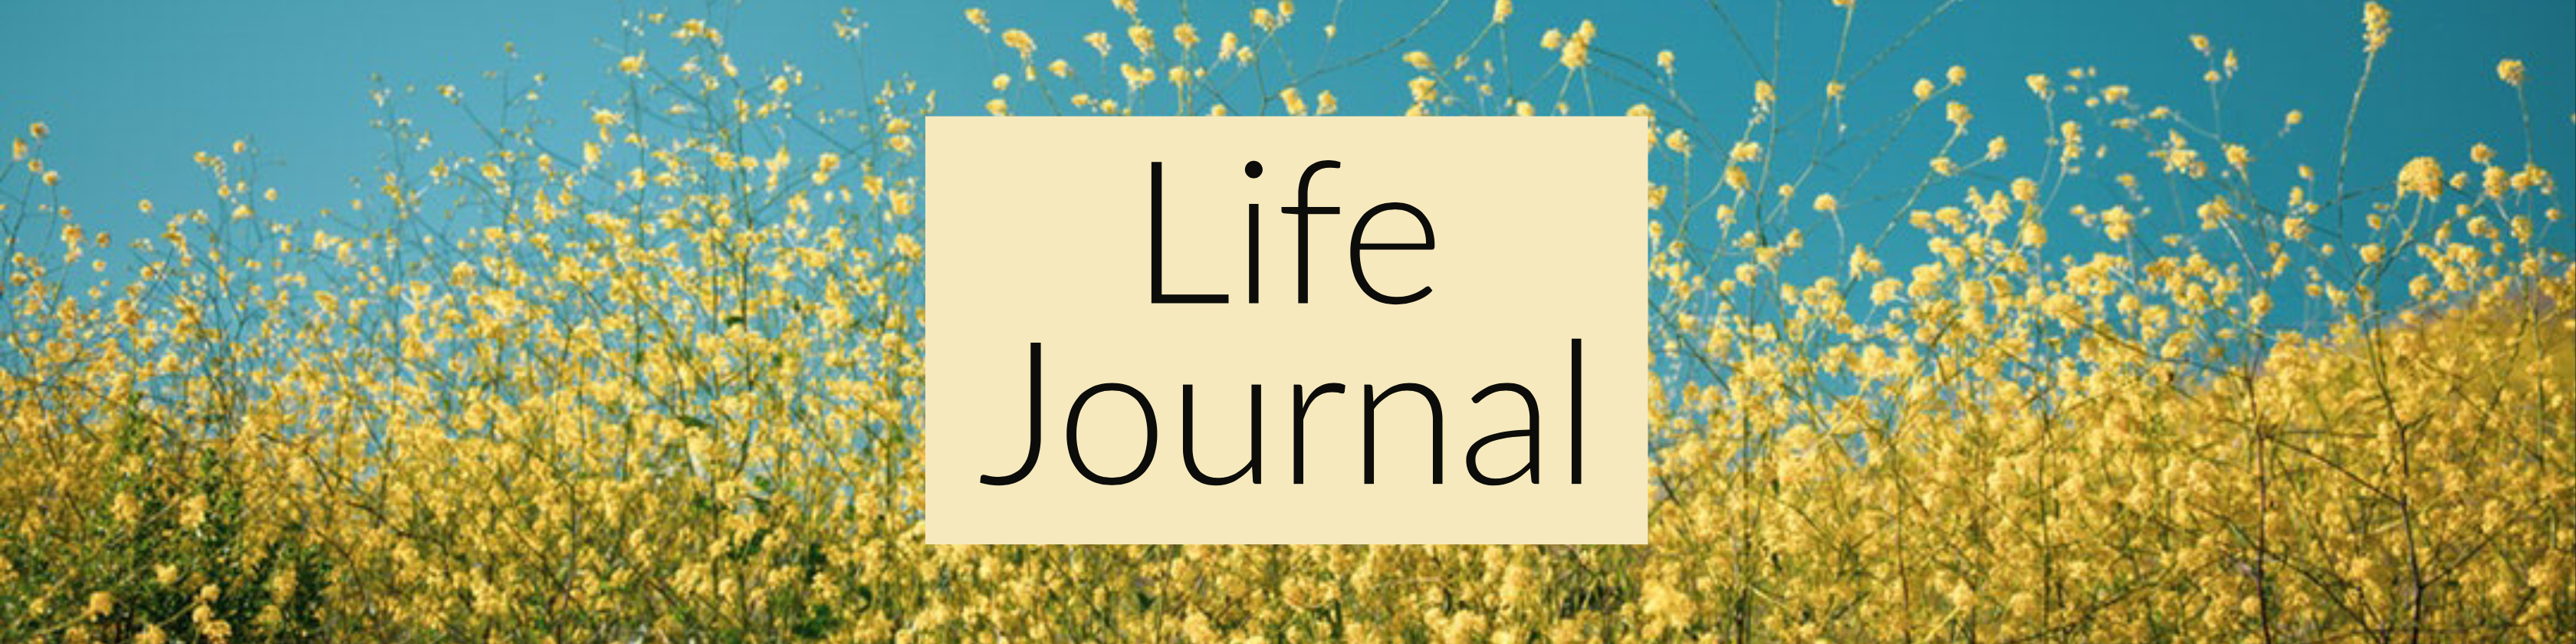 Life Journal website-2.jpg